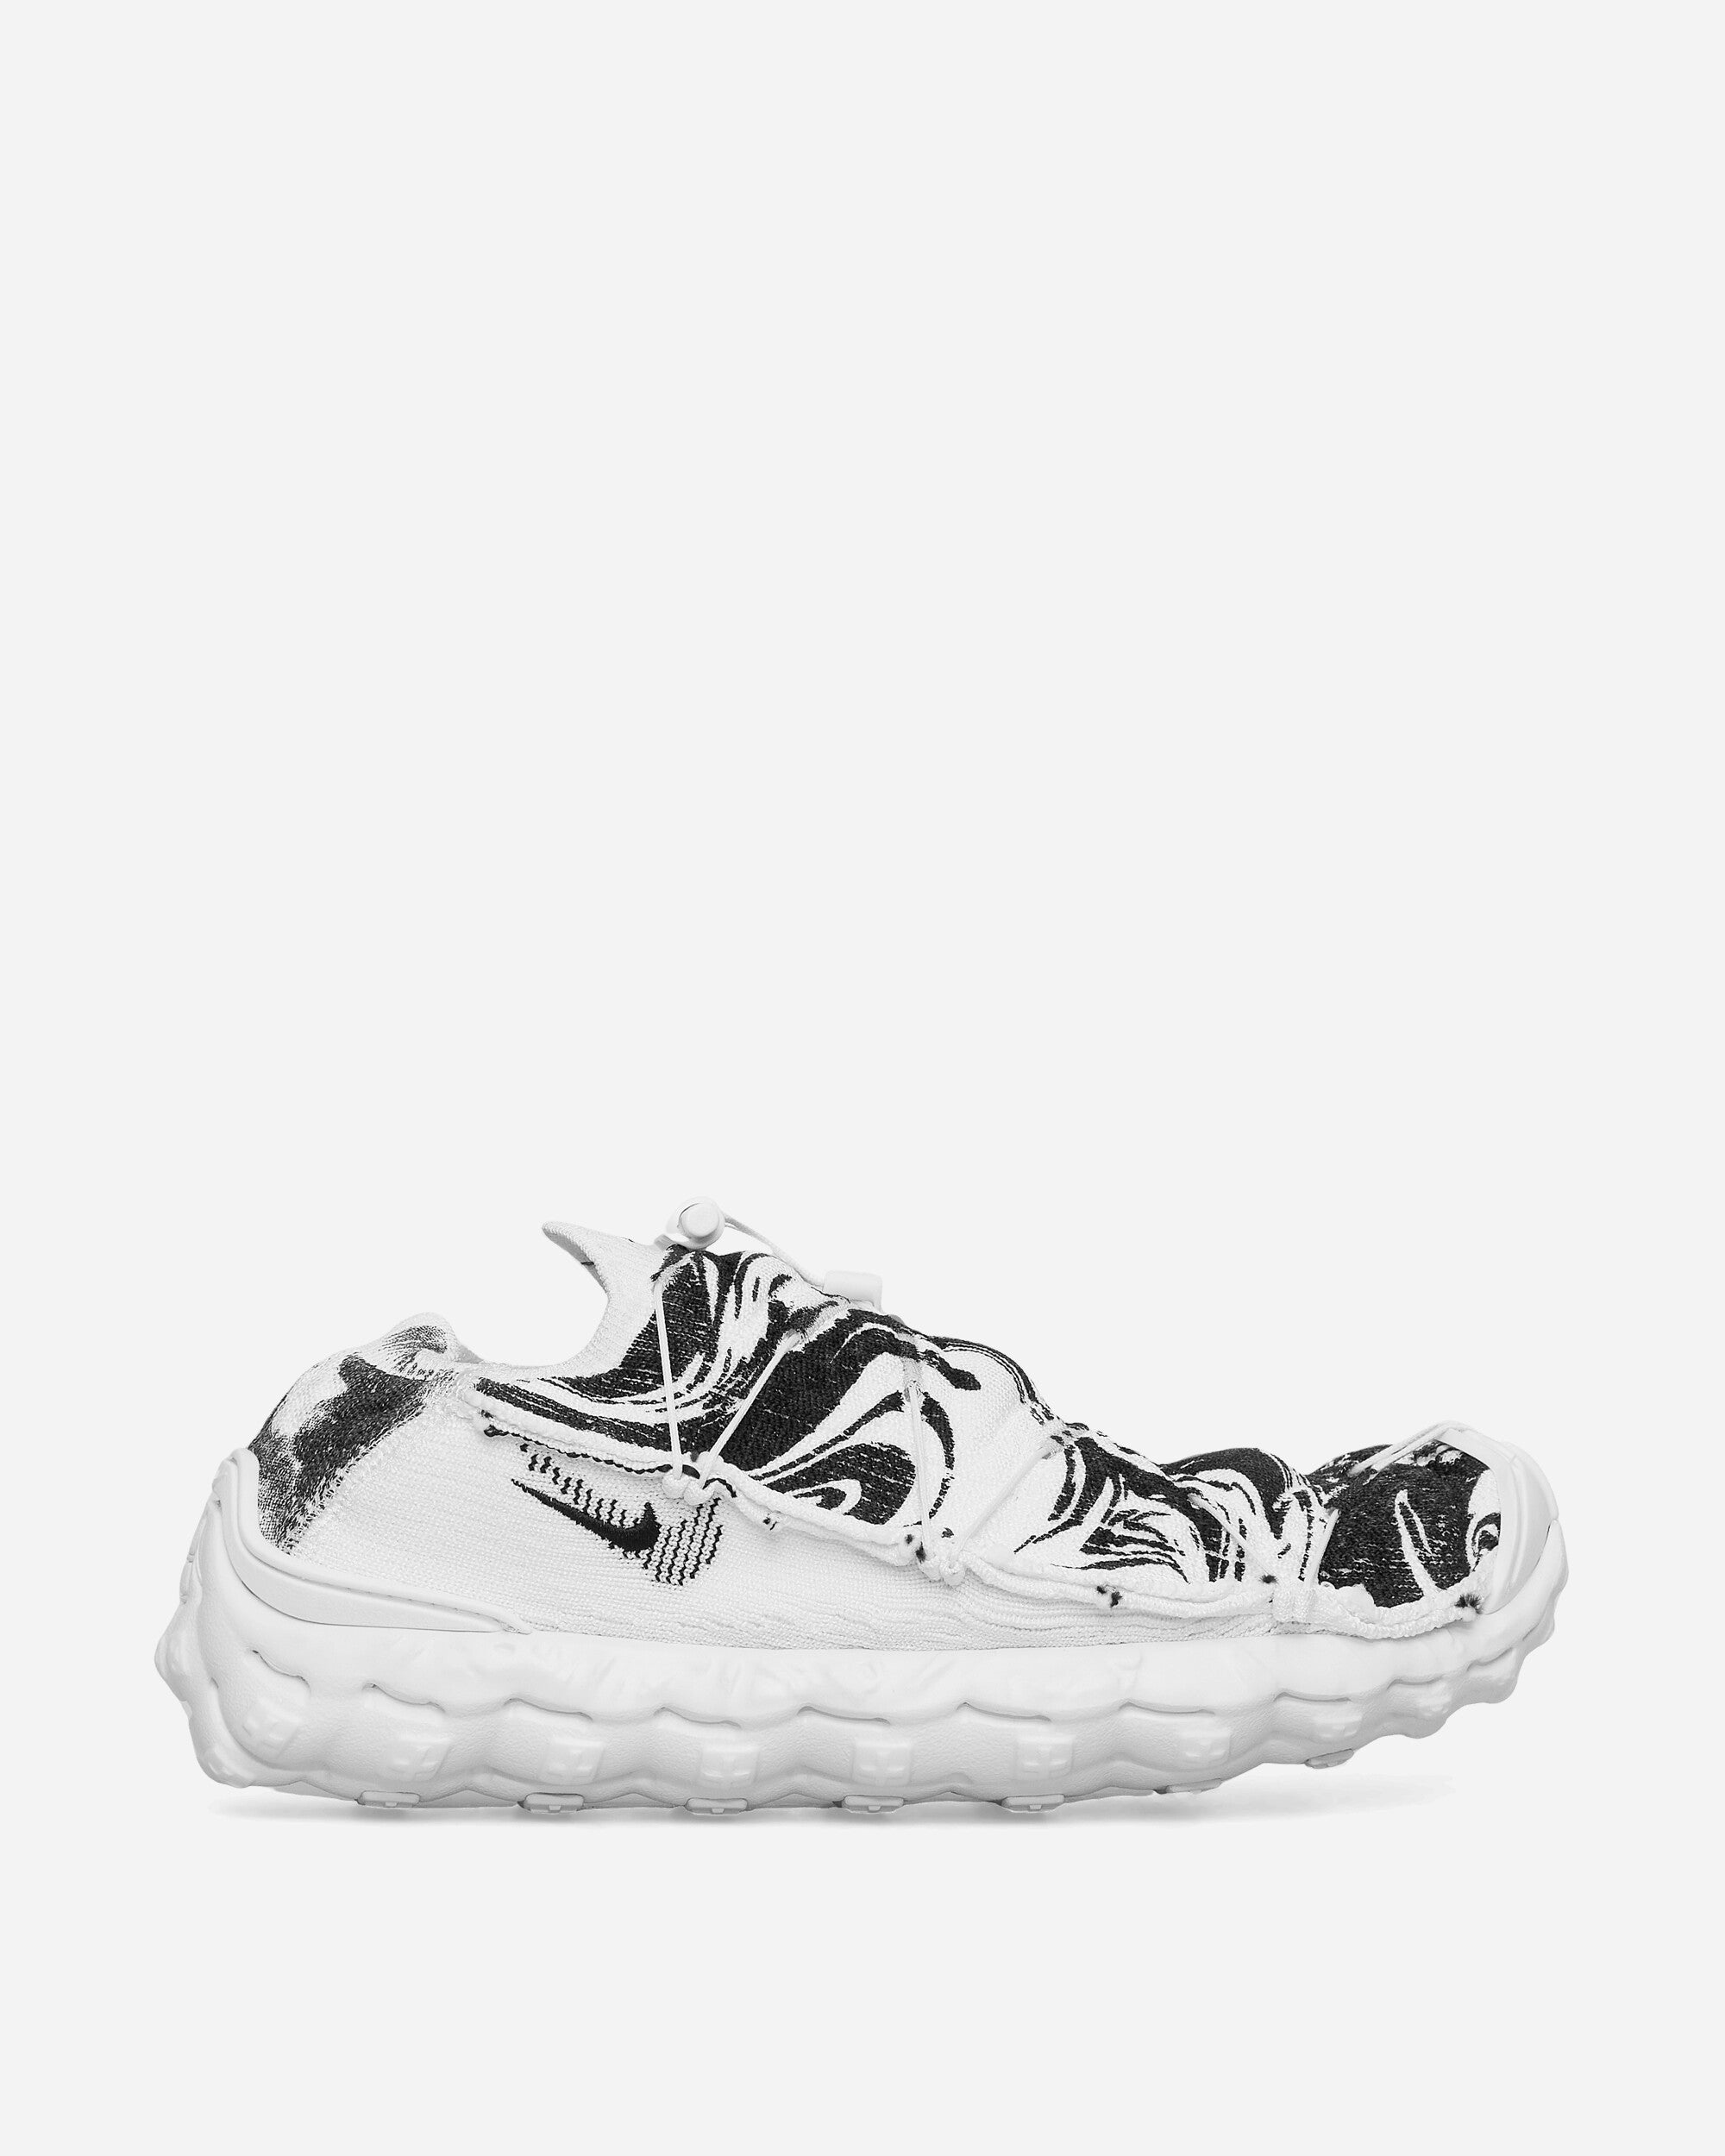 ISPA MindBody Sneakers Black / White